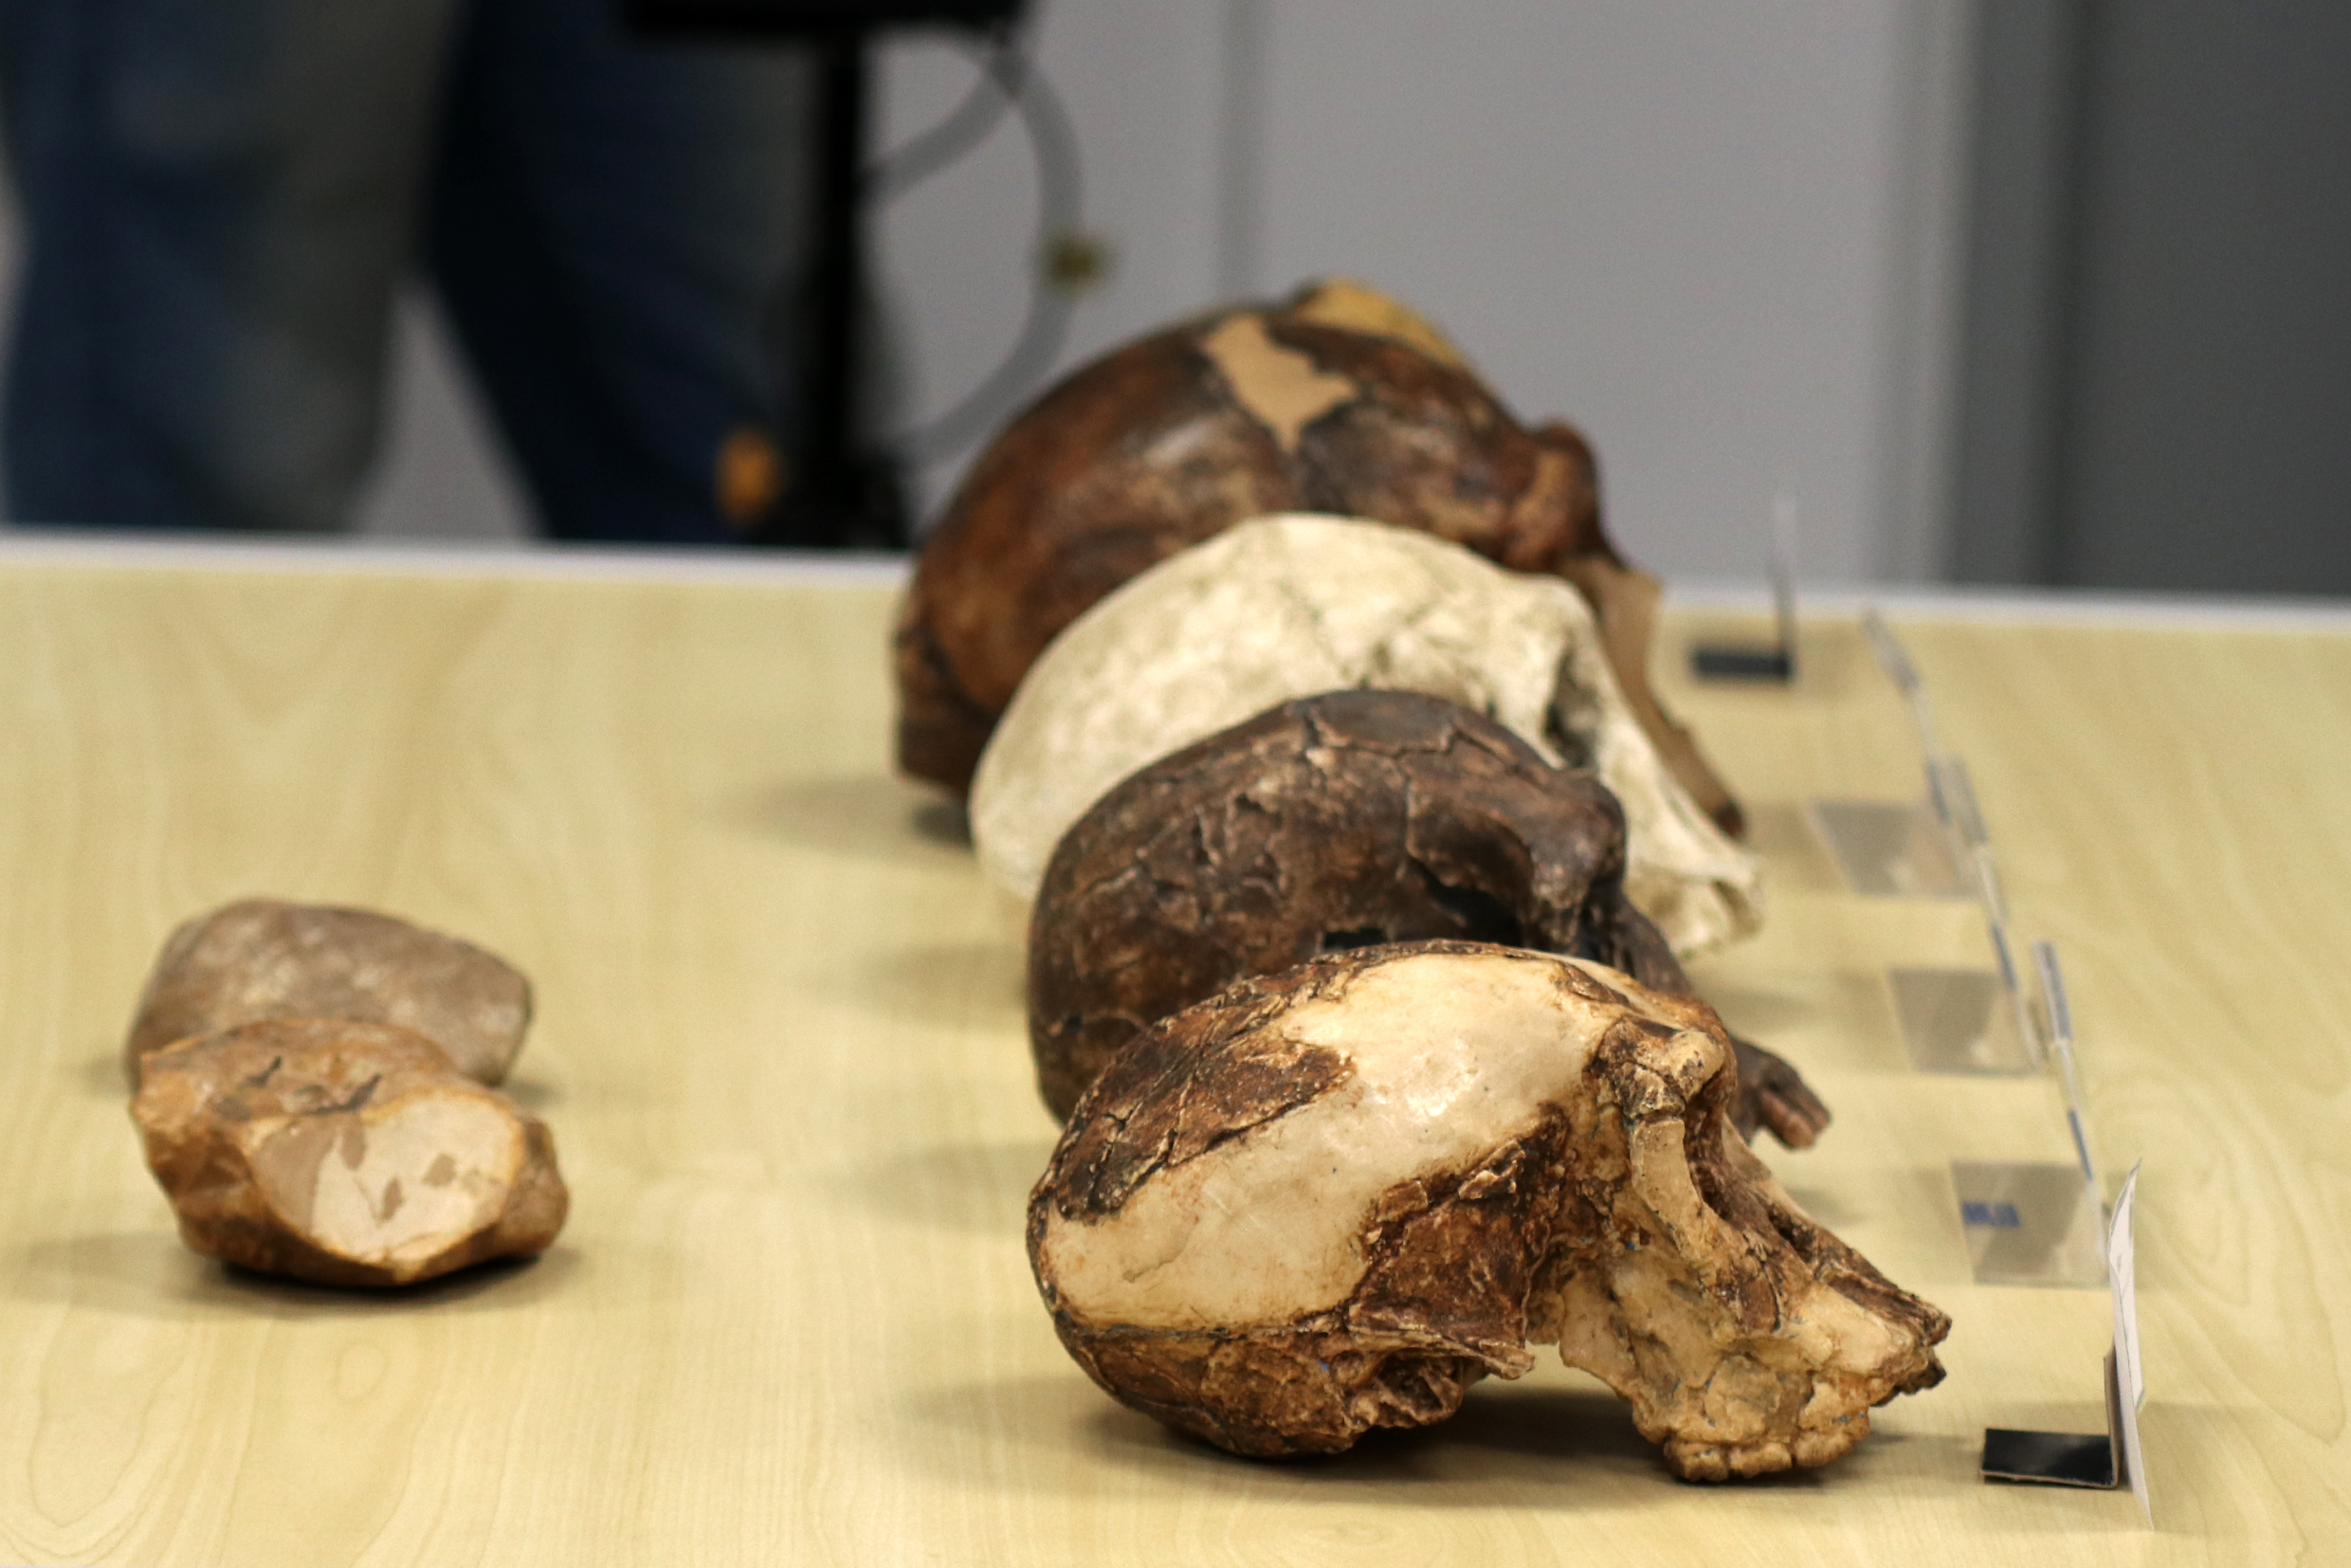 Pedras lascadas e réplicas de crânios de hominídeos